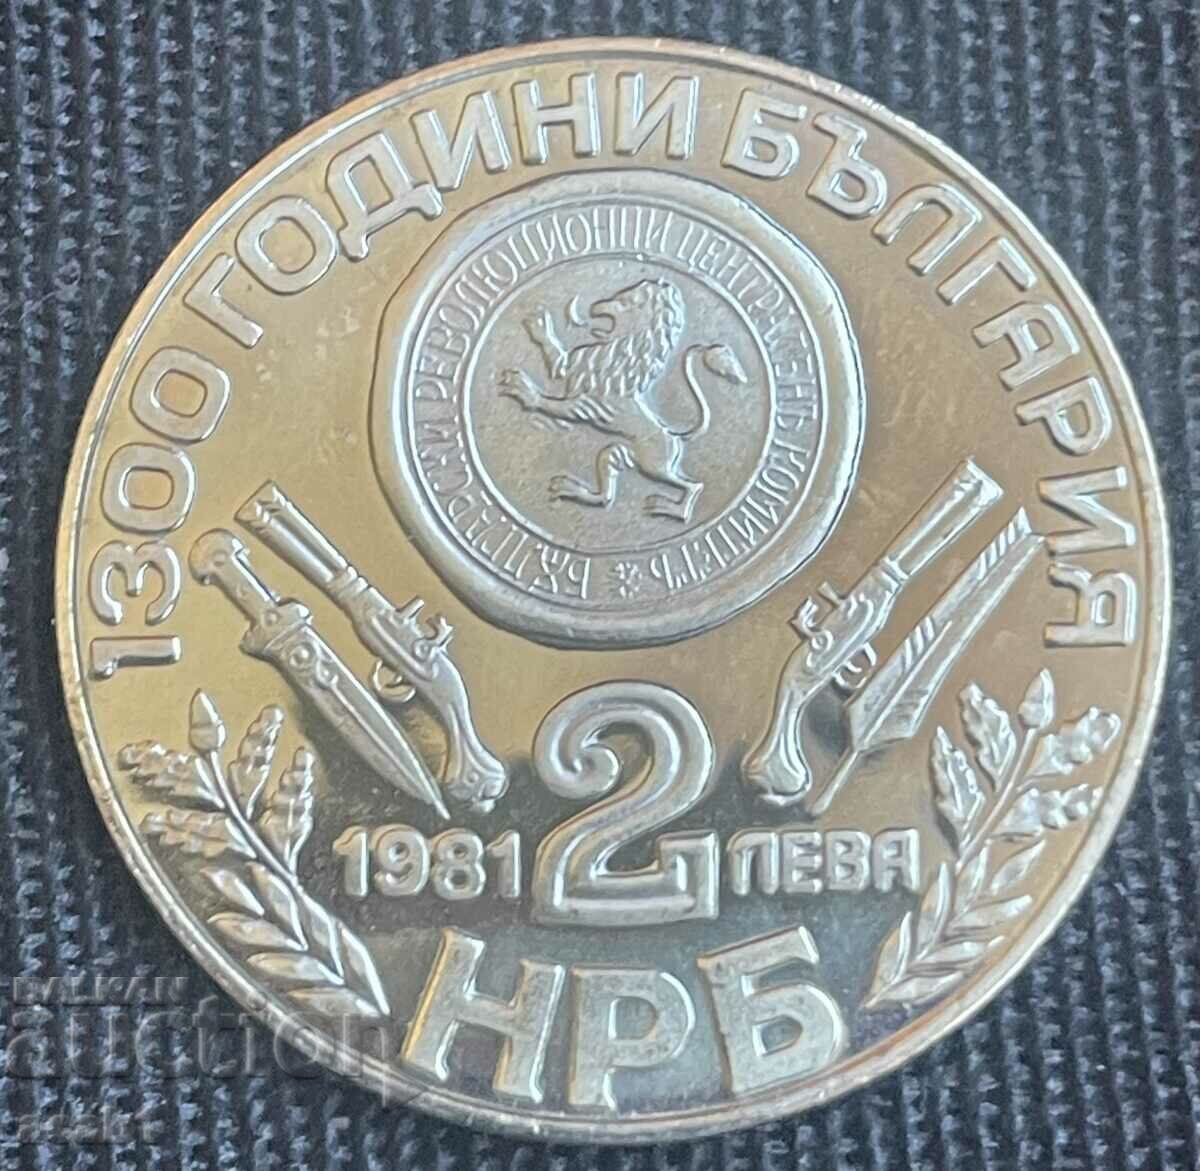 2 leva 1981 - 1300 years Bulgaria Oborishte